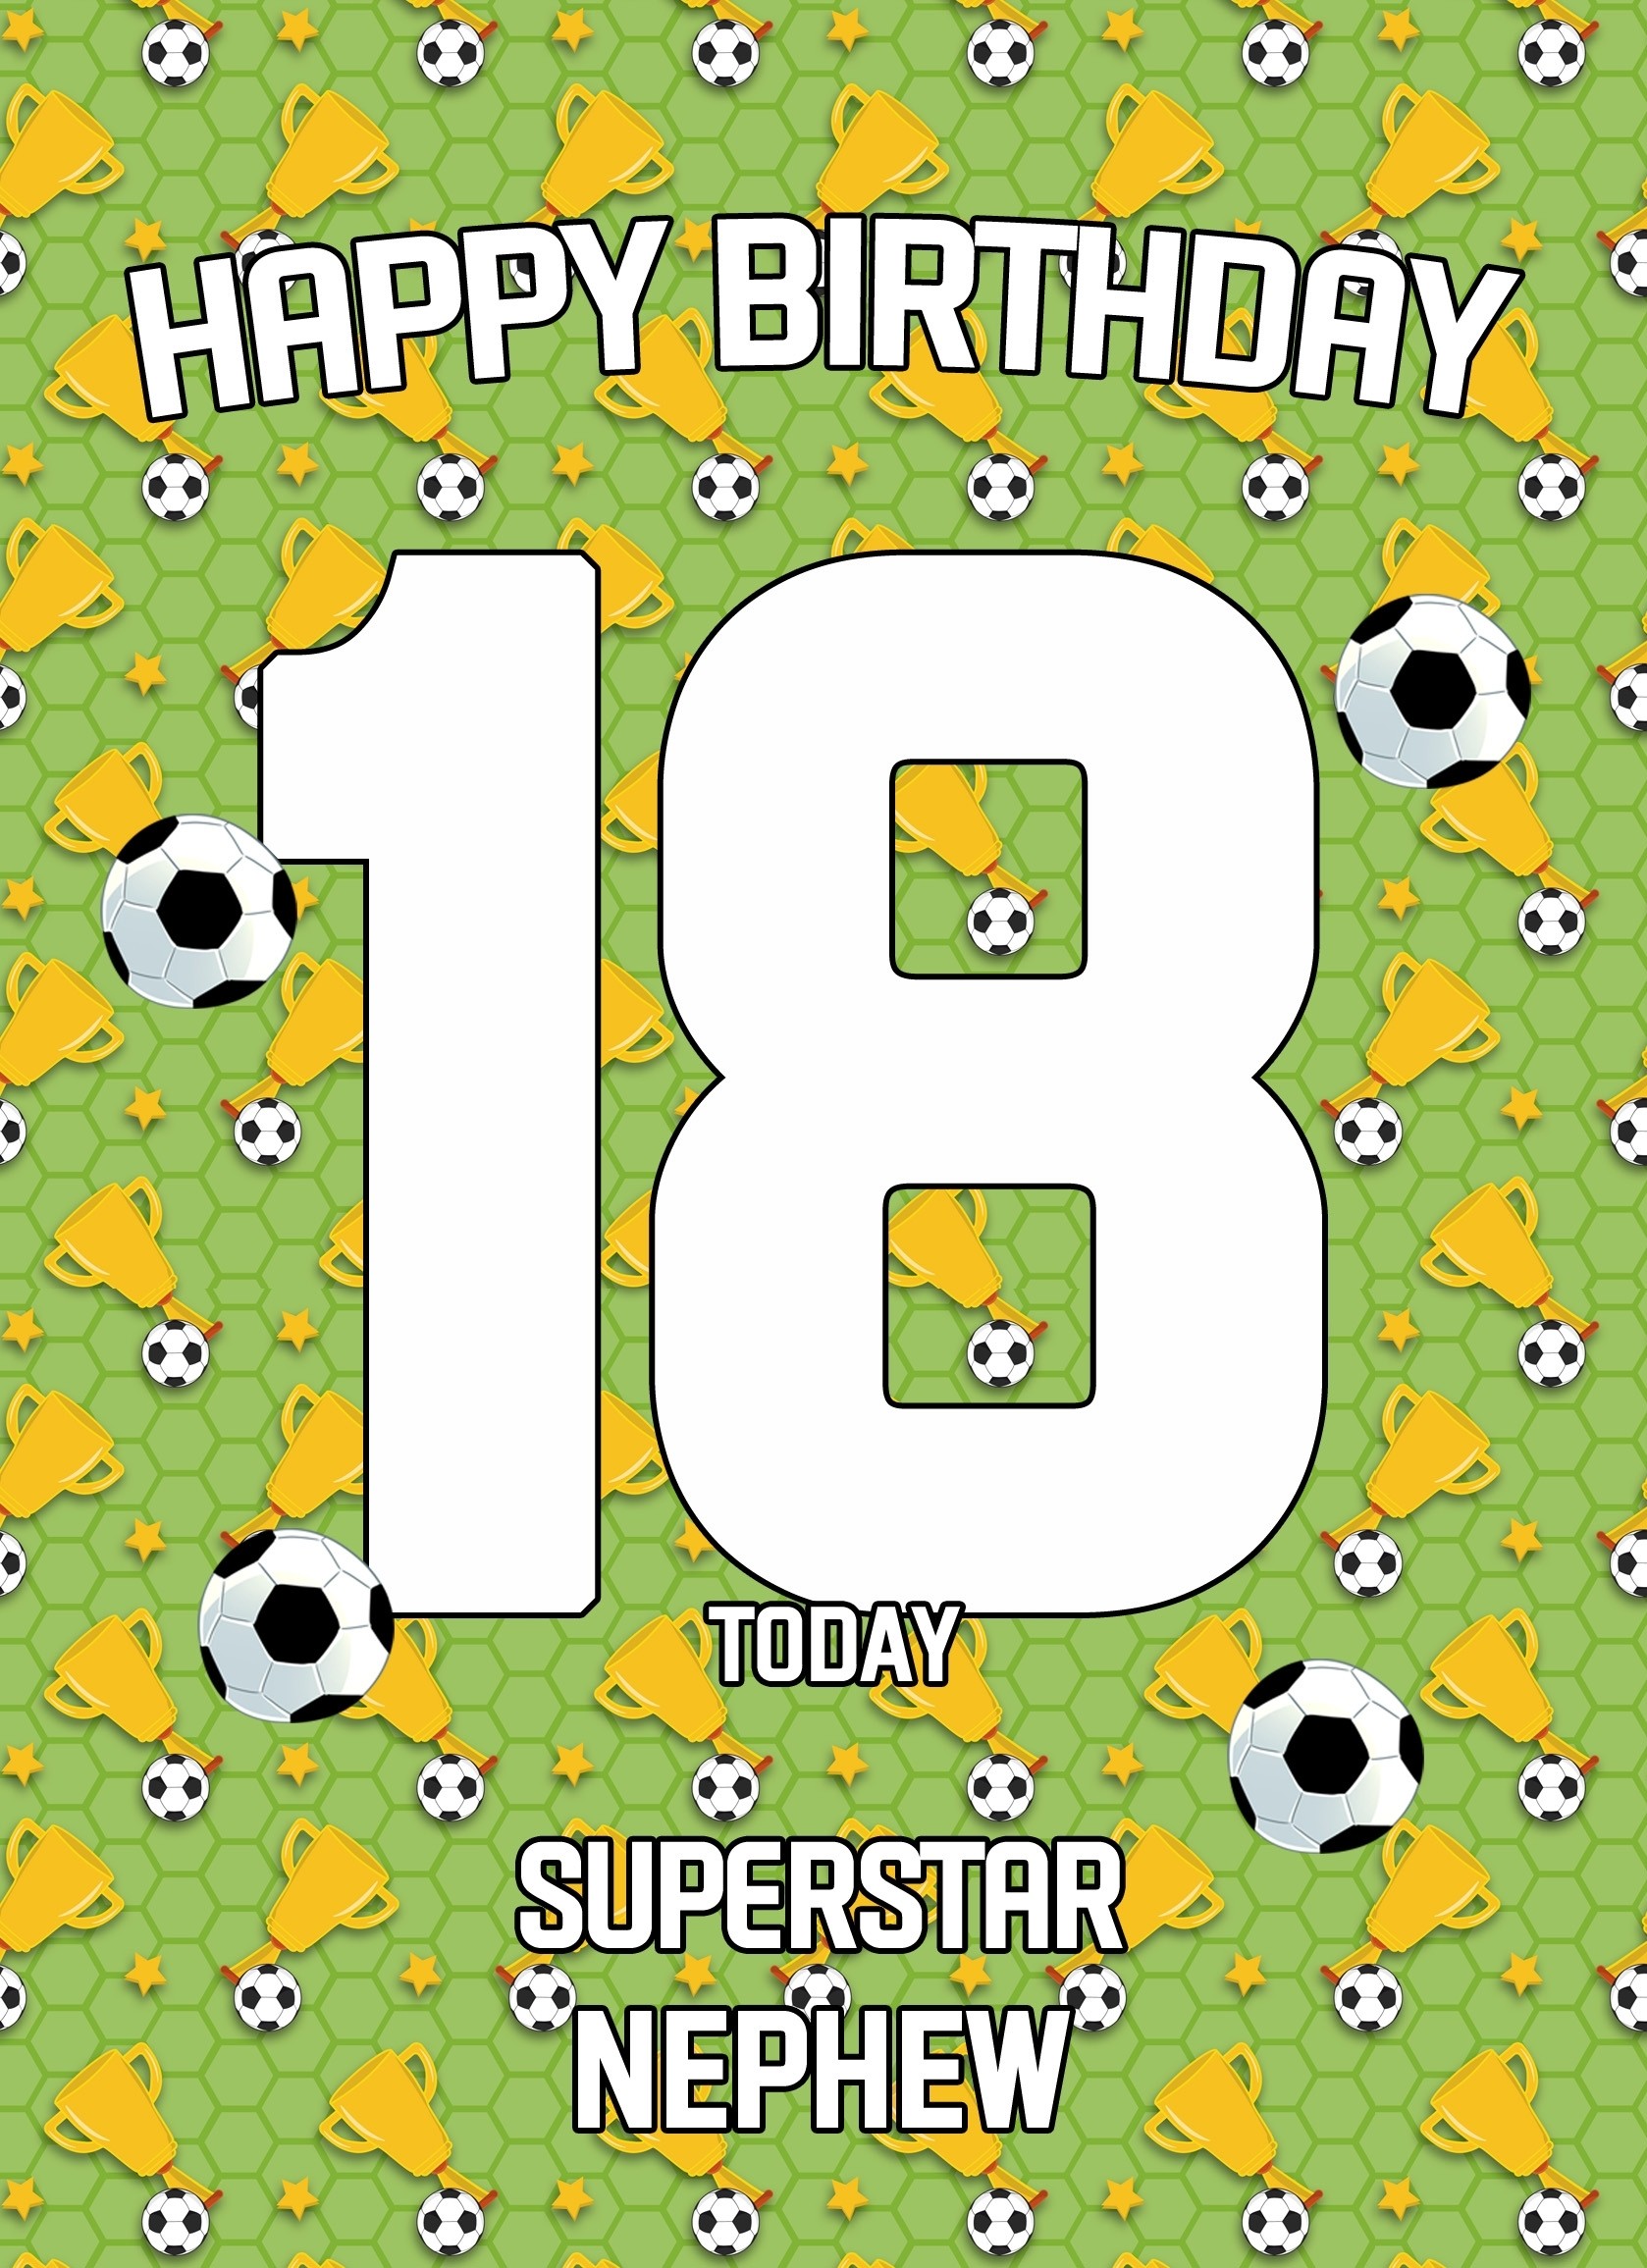 18th Birthday Football Card for Nephew